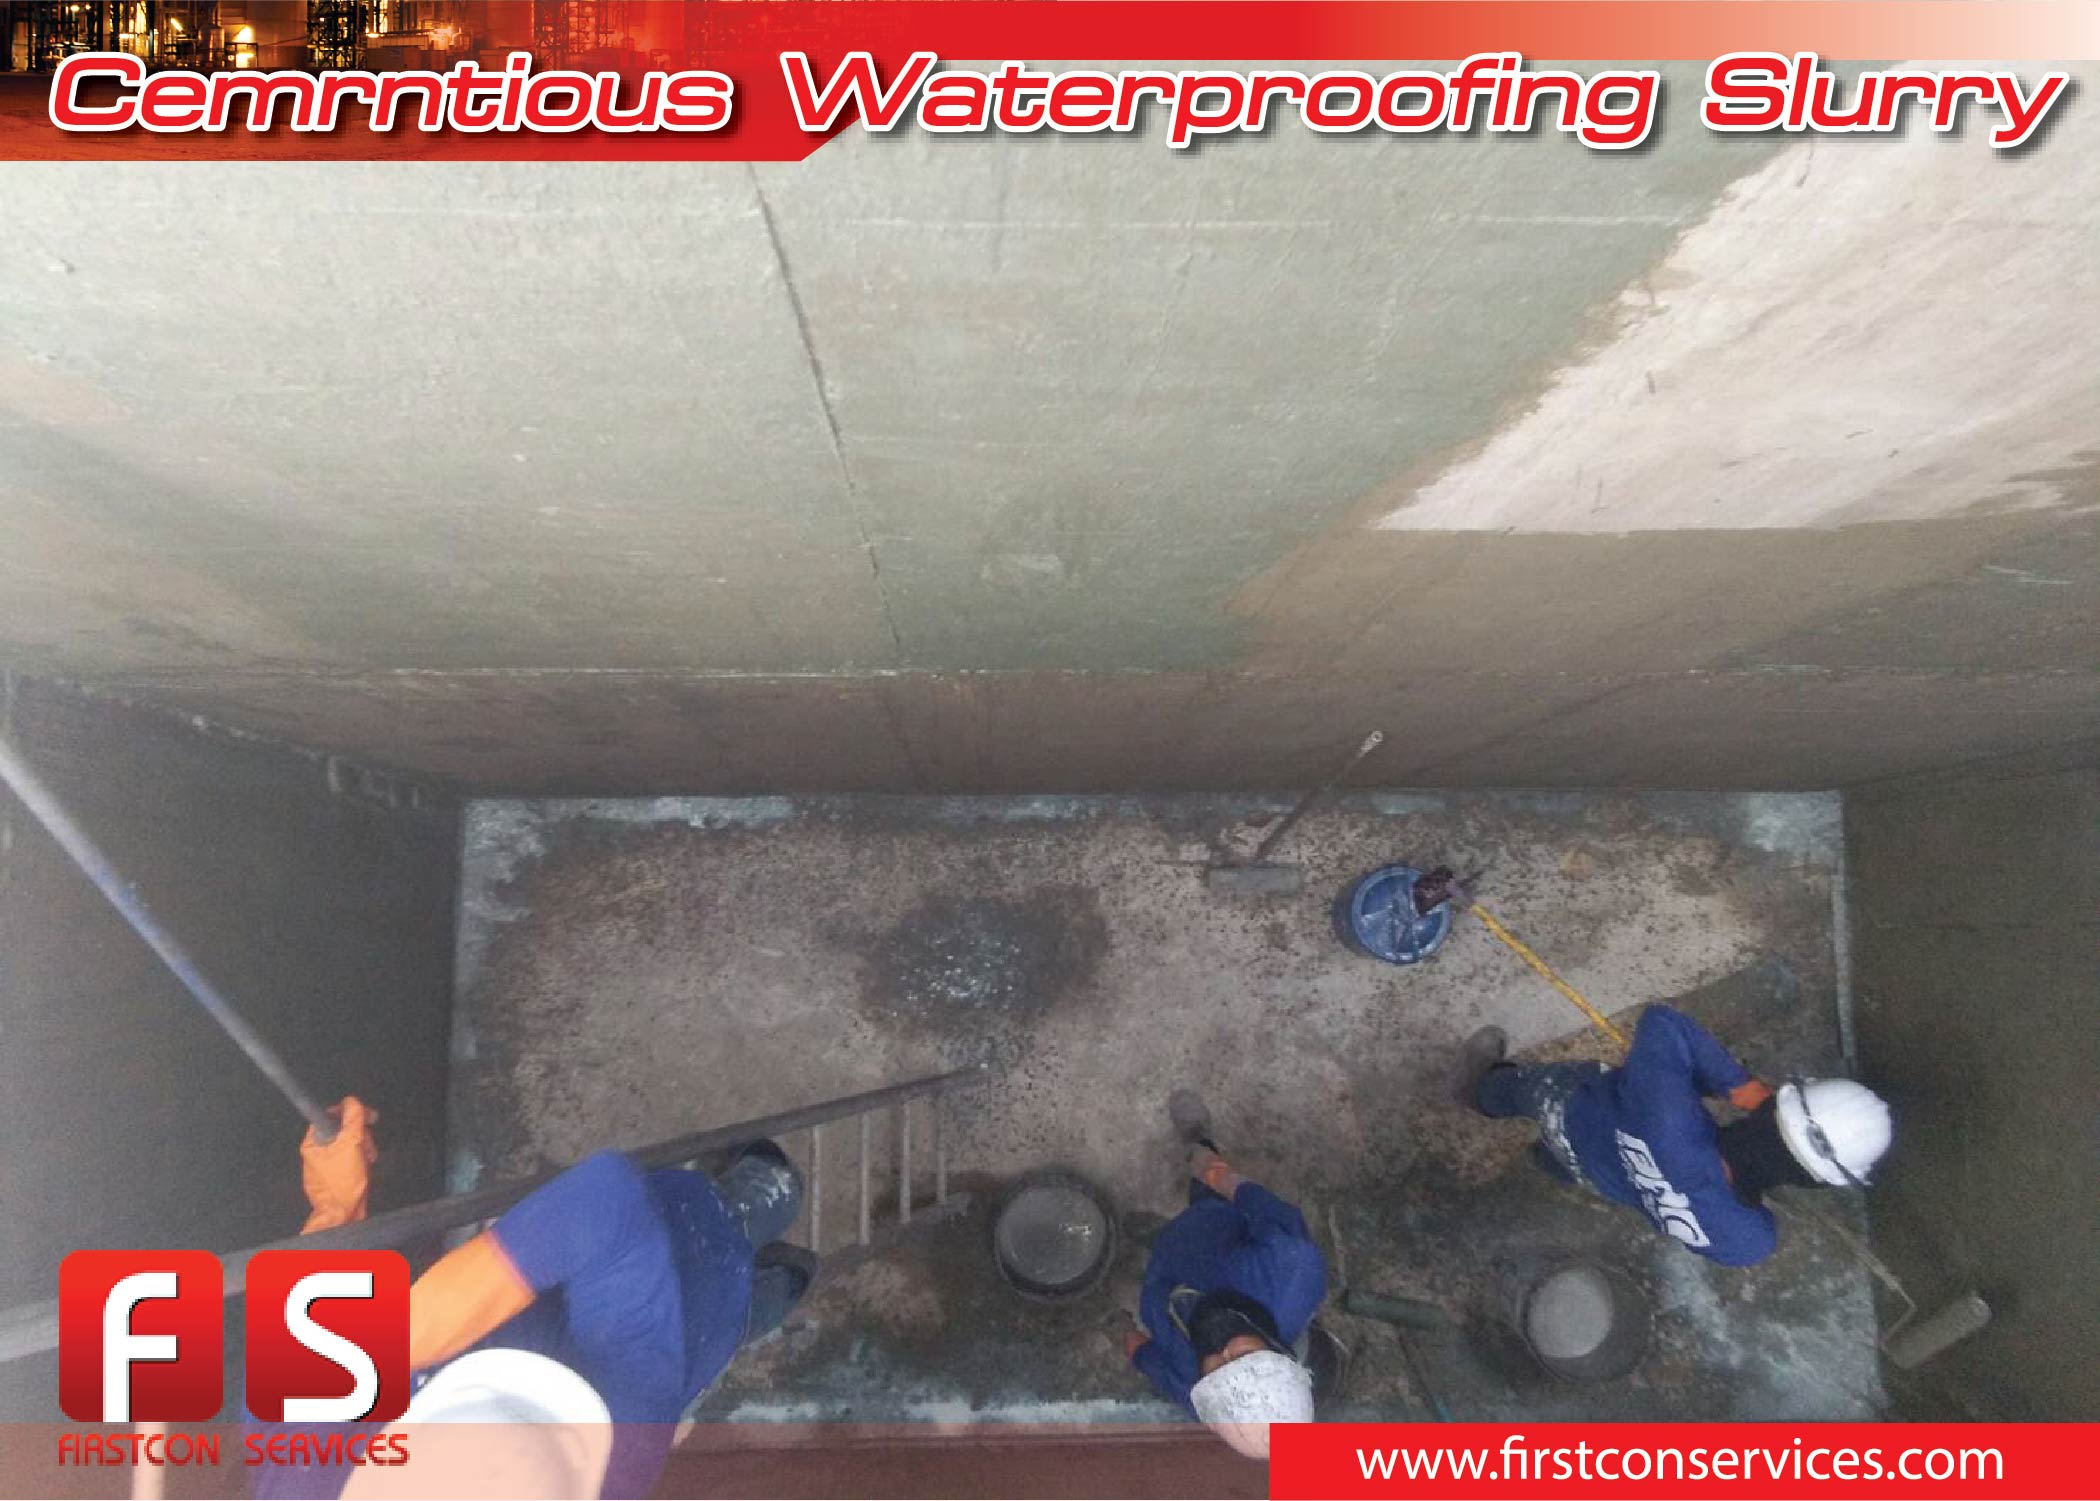 Cementious Waterproofing Slurry02